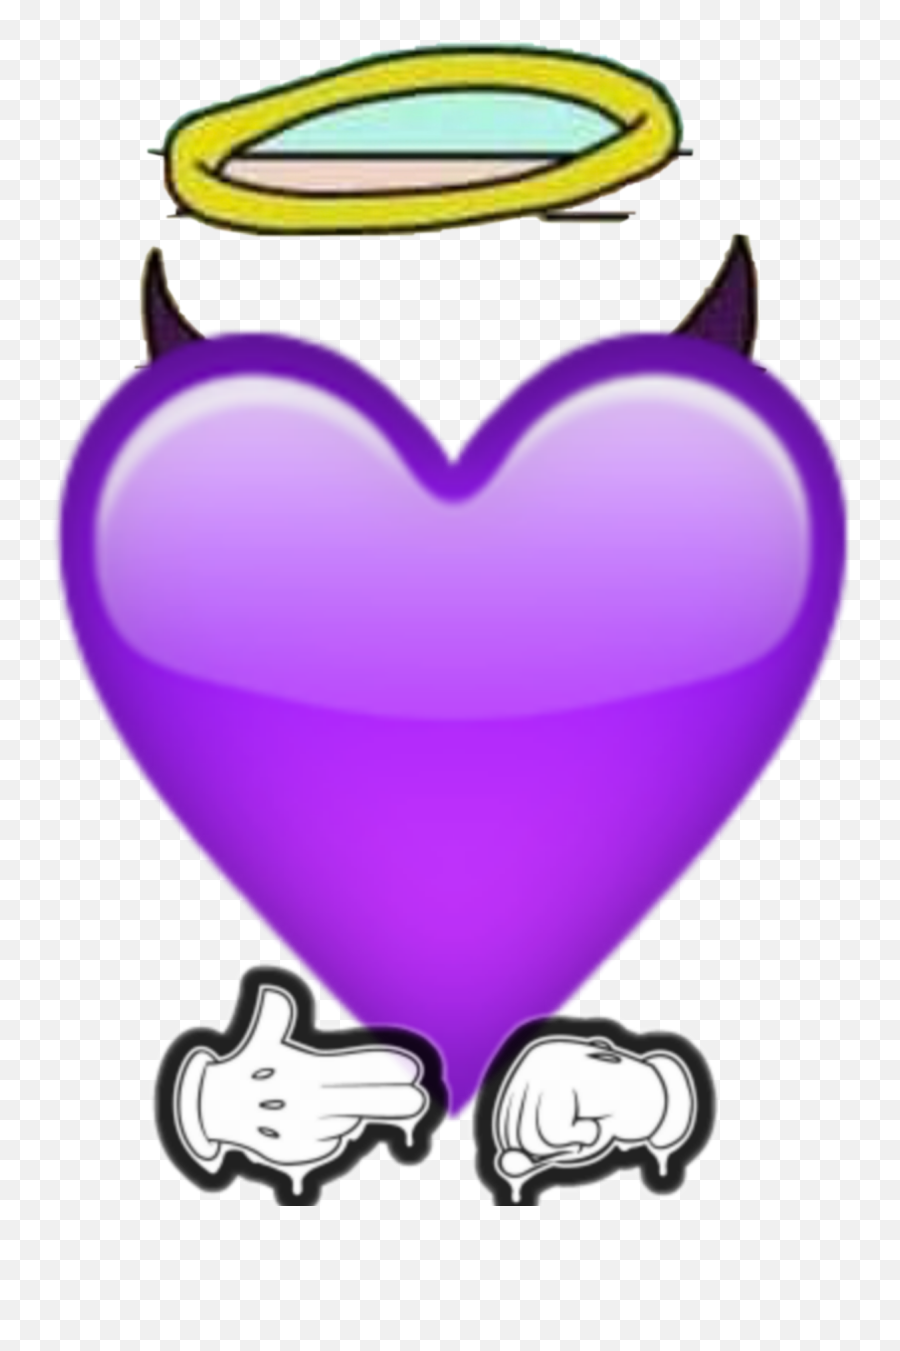 The Most Edited Thasupreme Picsart Emoji,Purple Devil Emoji